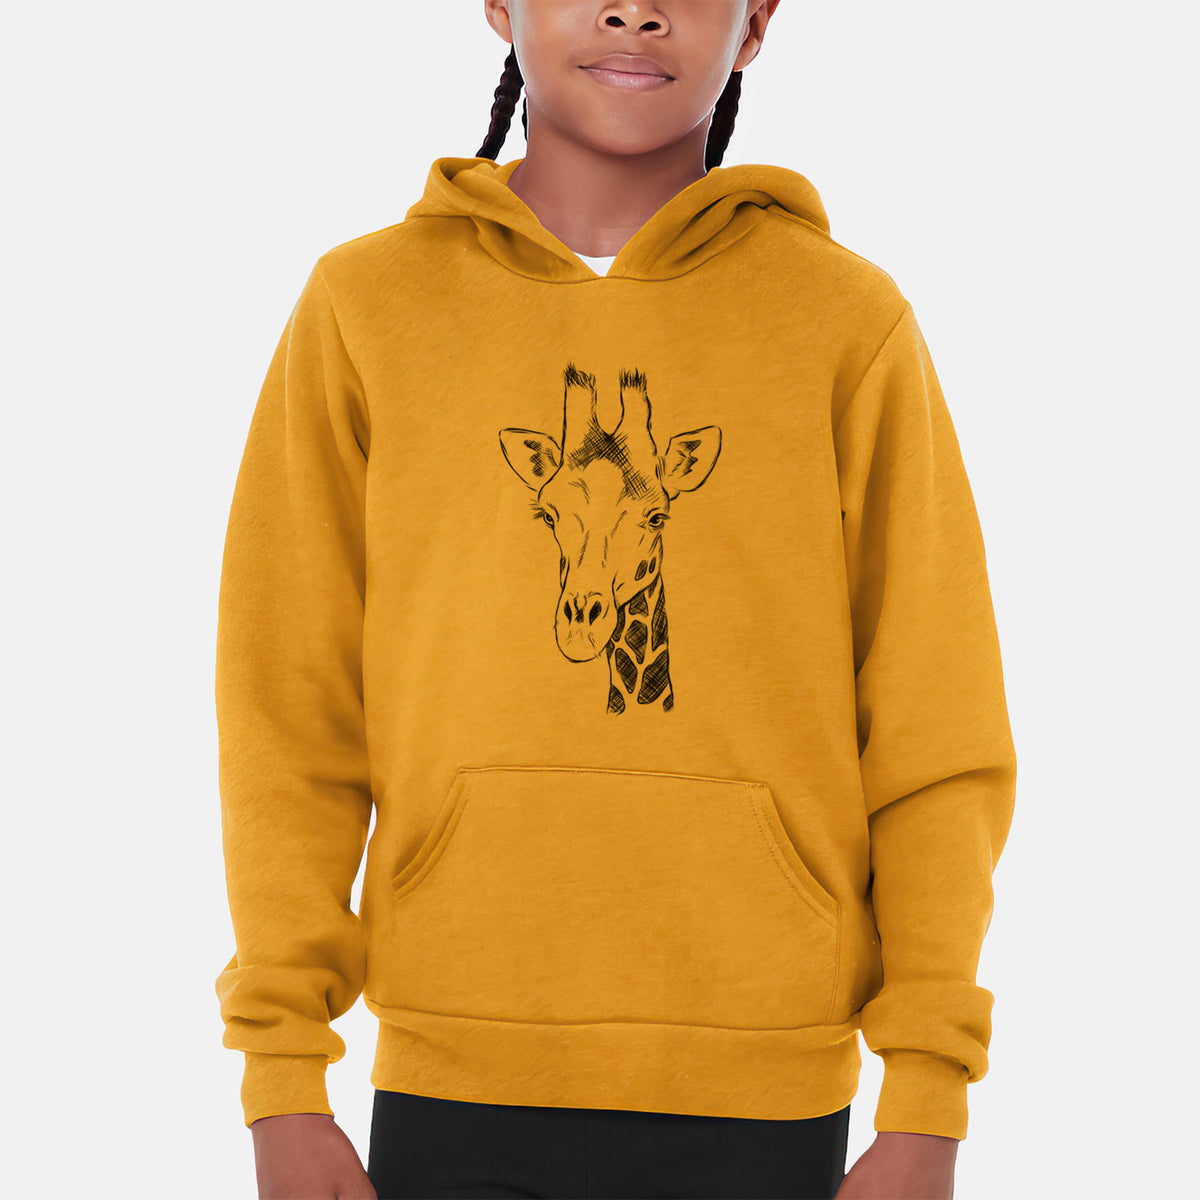 Southern Giraffe - Giraffa giraffa - Youth Hoodie Sweatshirt